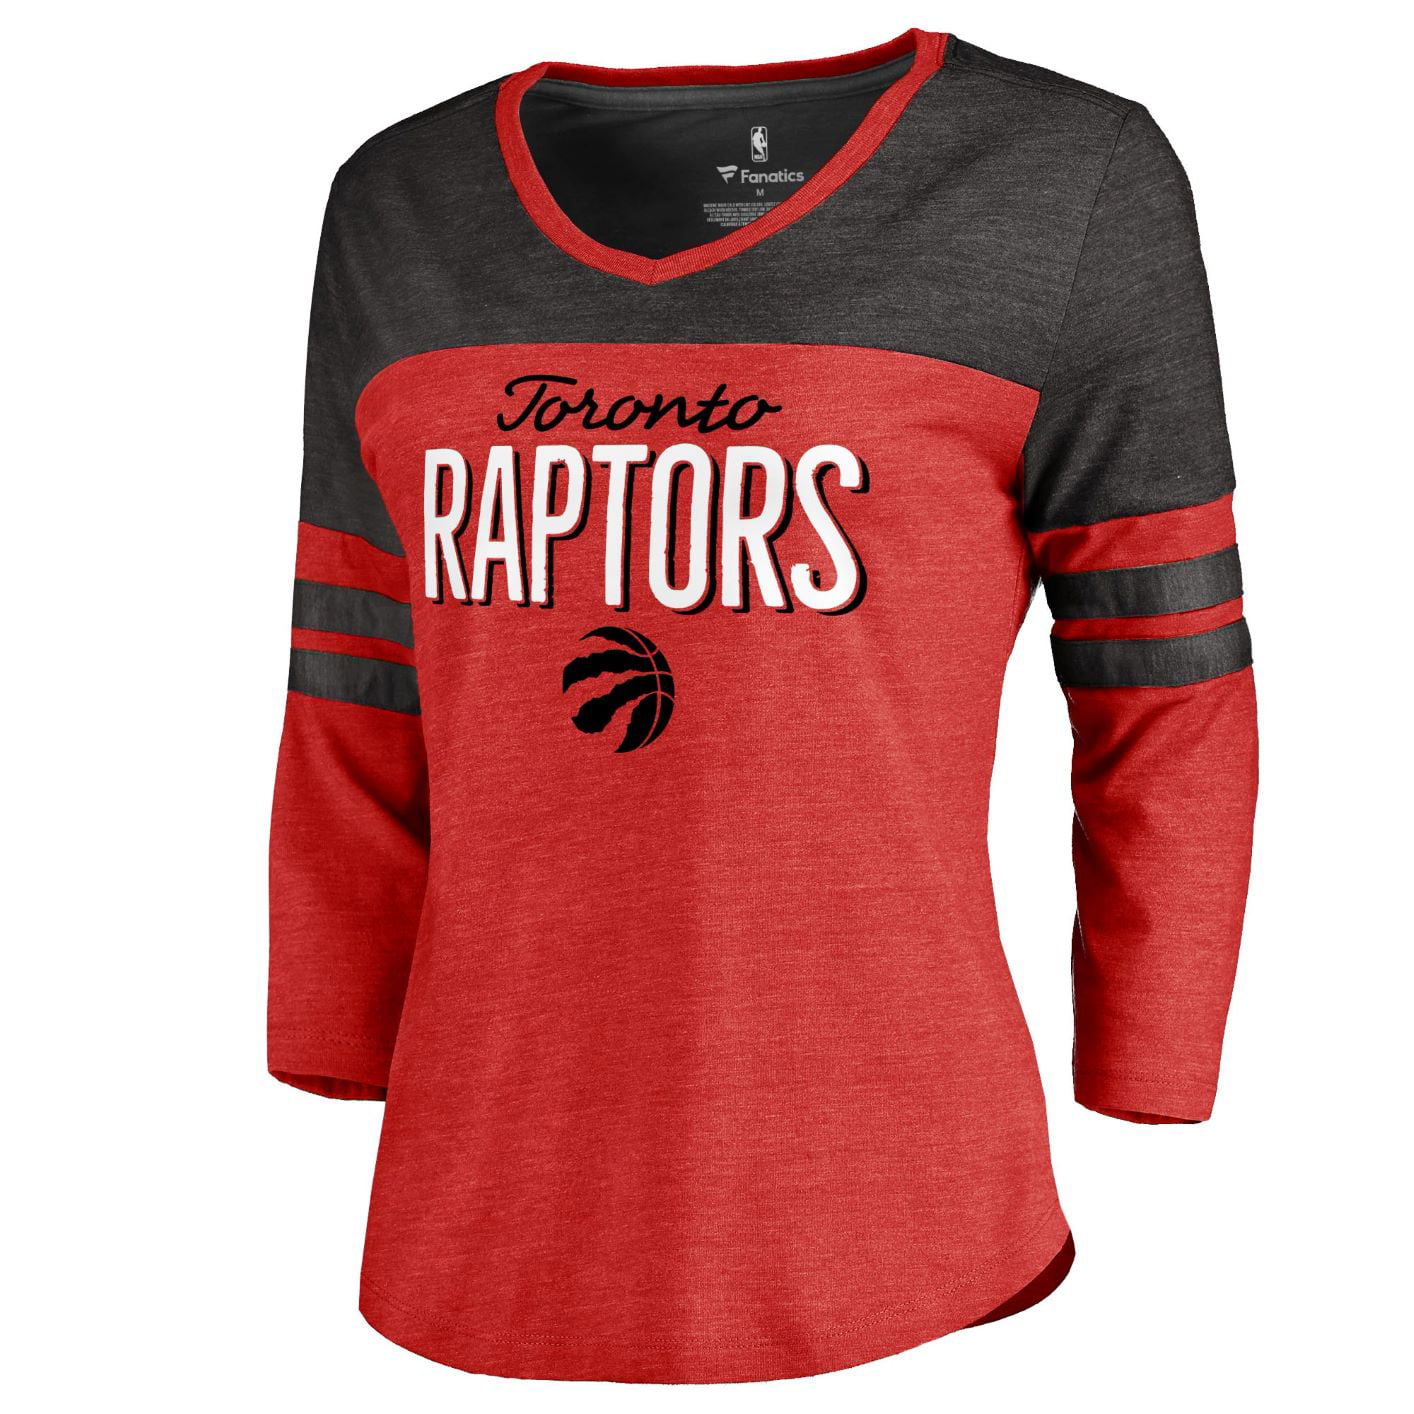 Toronto Raptors Team Shop - Walmart.com